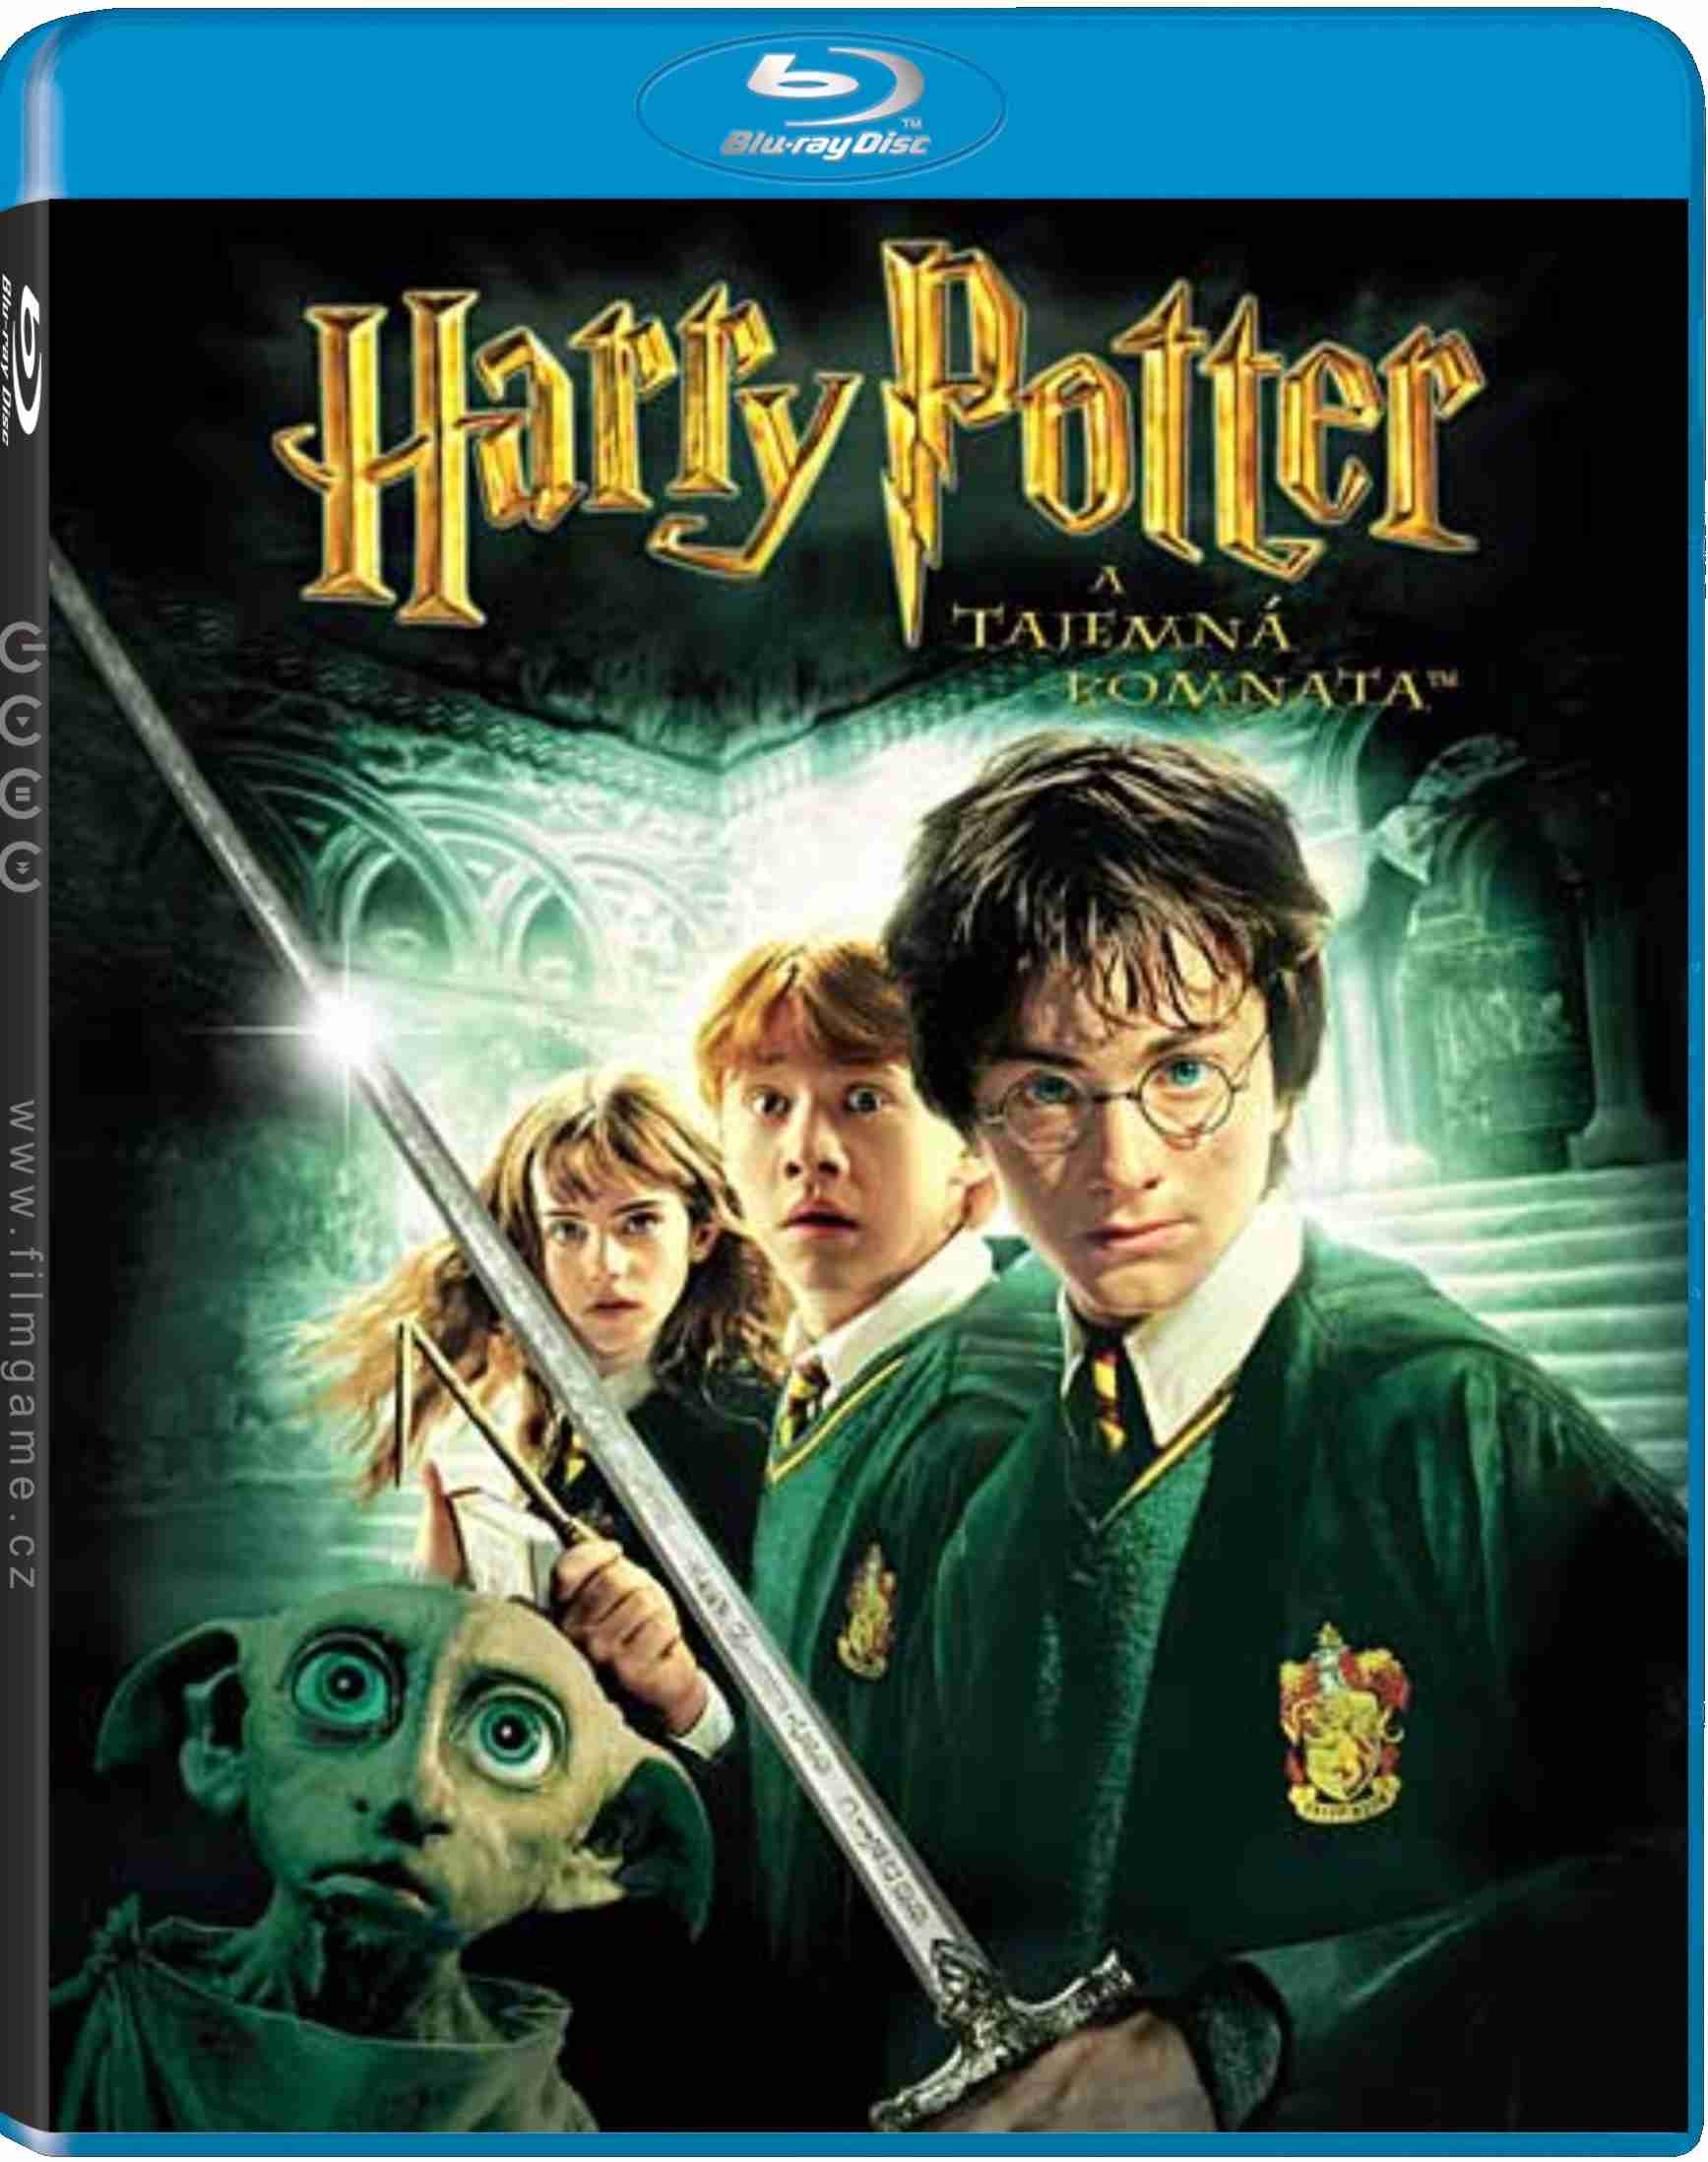 Stiahni si HD Filmy Harry Potter a Tajemna komnata/ Harry Potter and the Chamber of Secrets (2002)(CZ/EN) [720p] = CSFD 77%